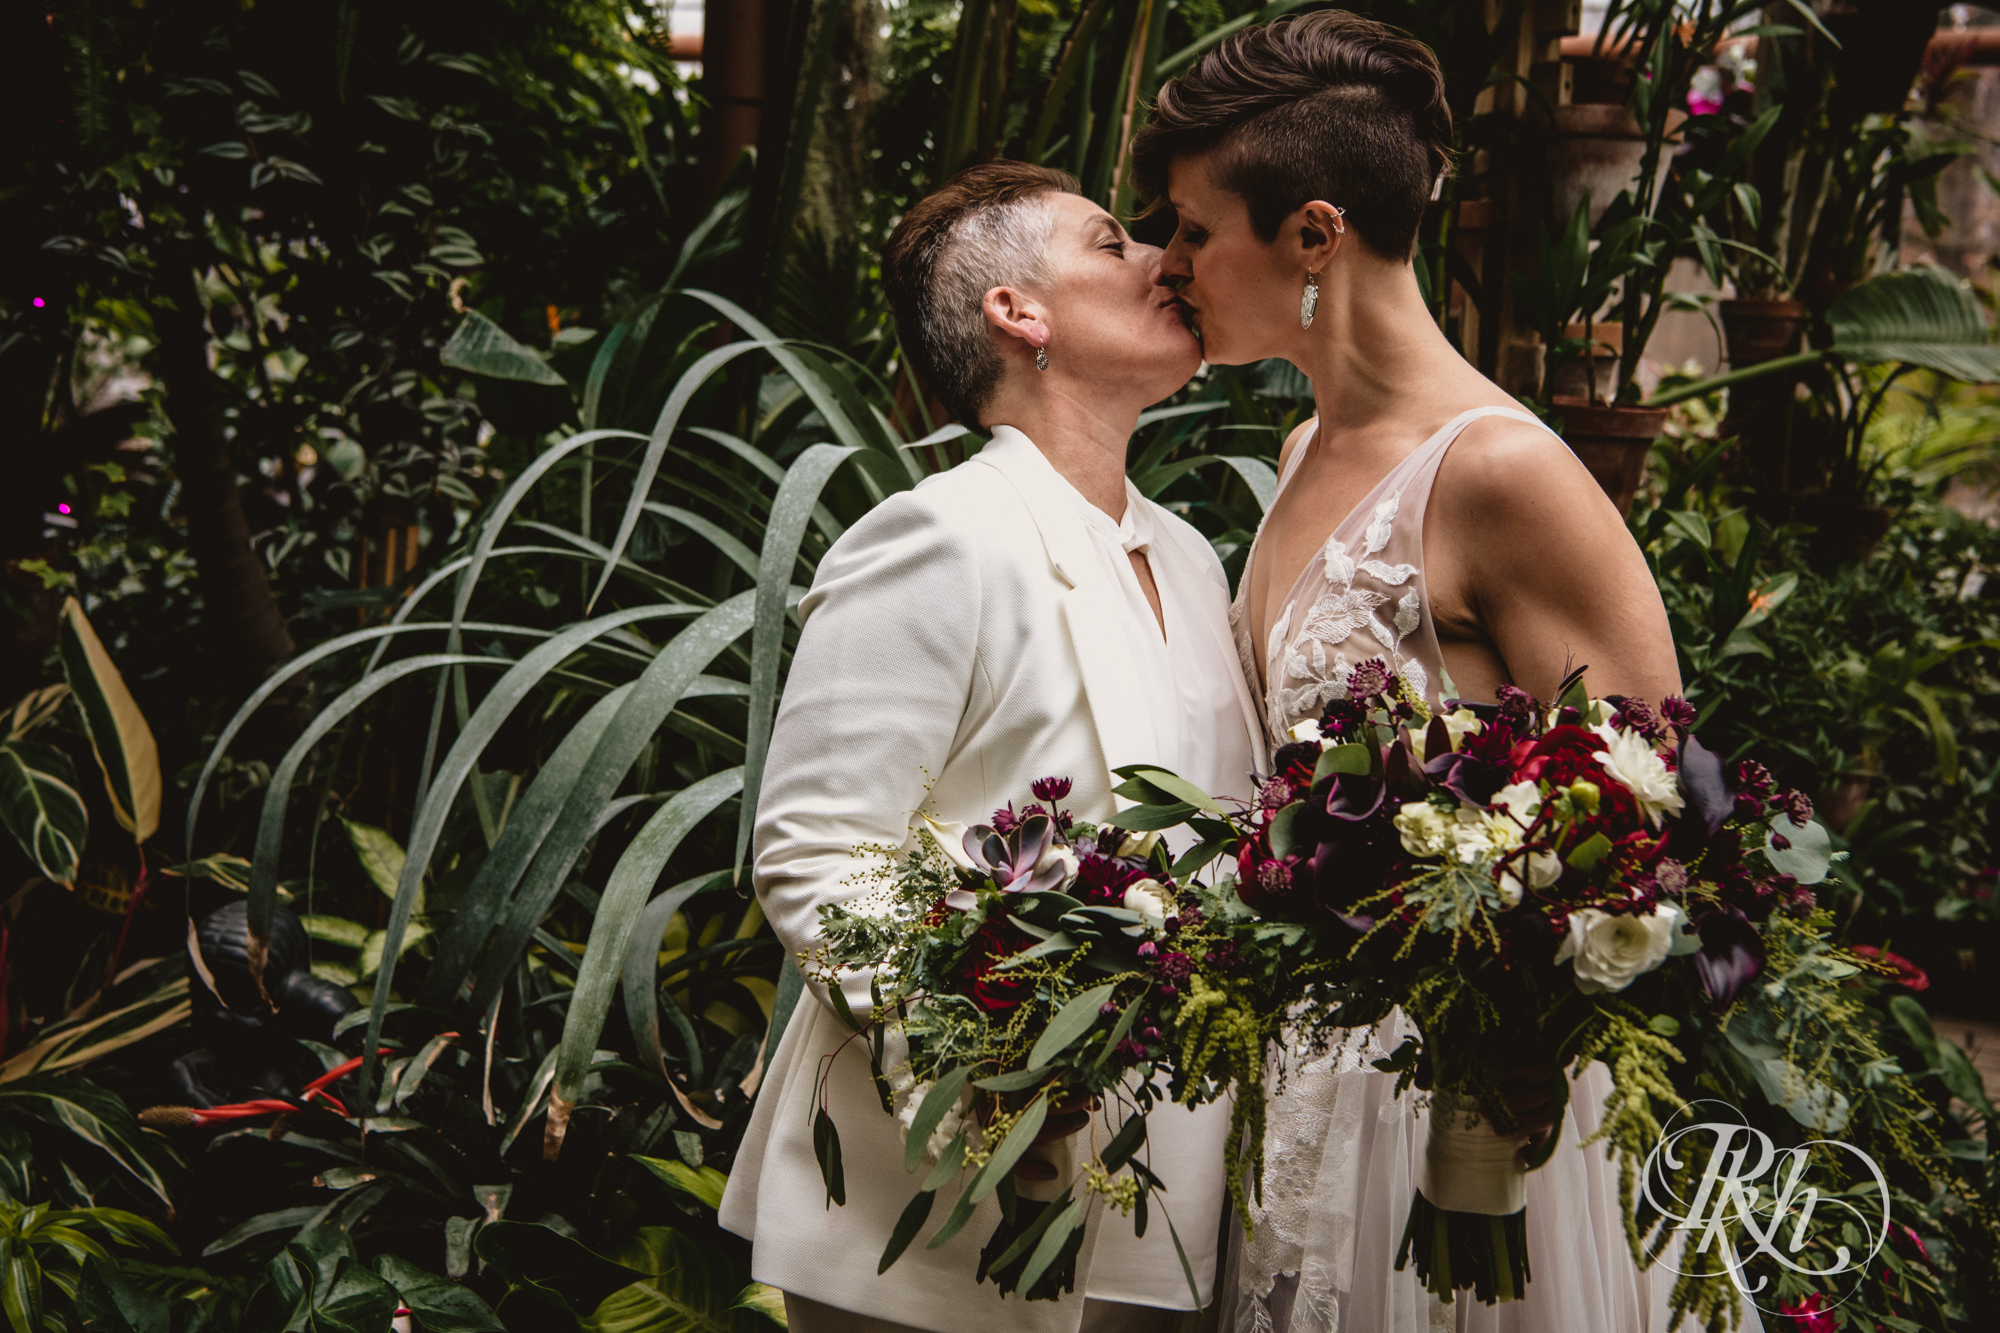 Two brides kissing at an LGBTQ wedding at the Minnesota Landscape Arboretum in Minnesota.